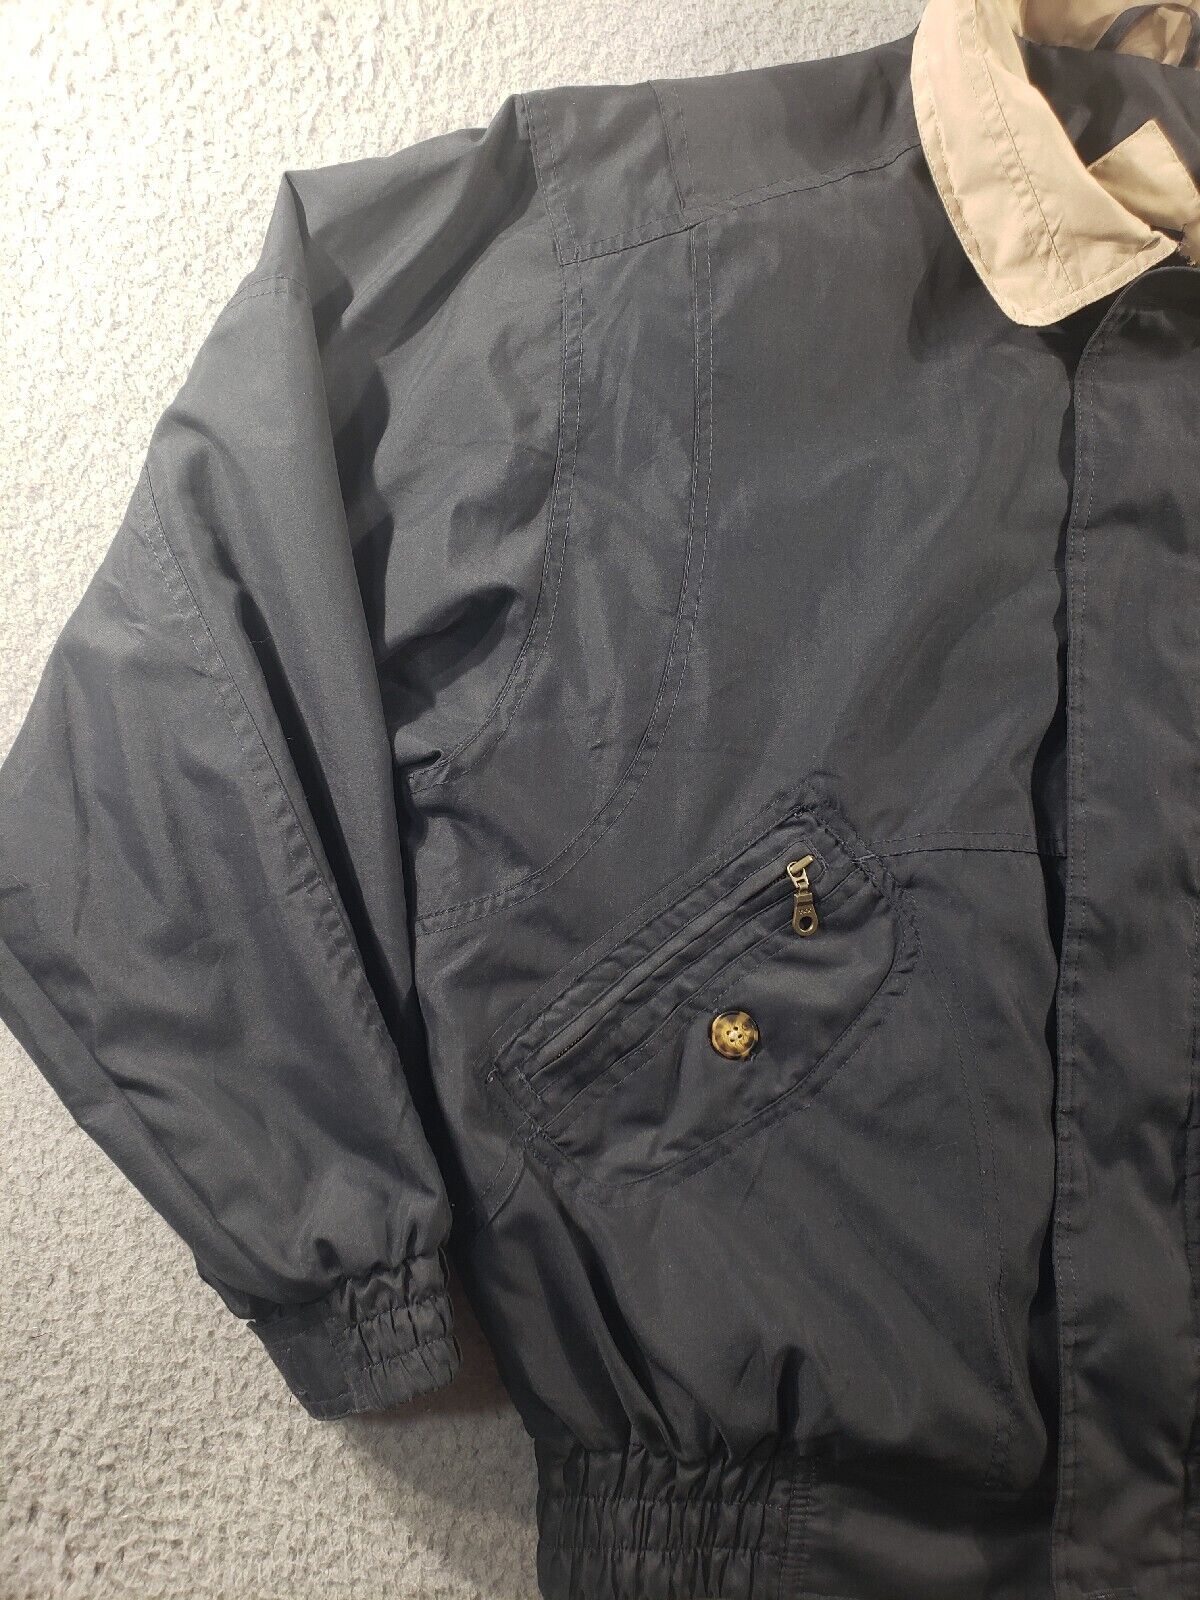 Winner Mate Full Zip Jacket Men's Size XL USA Swi… - image 2